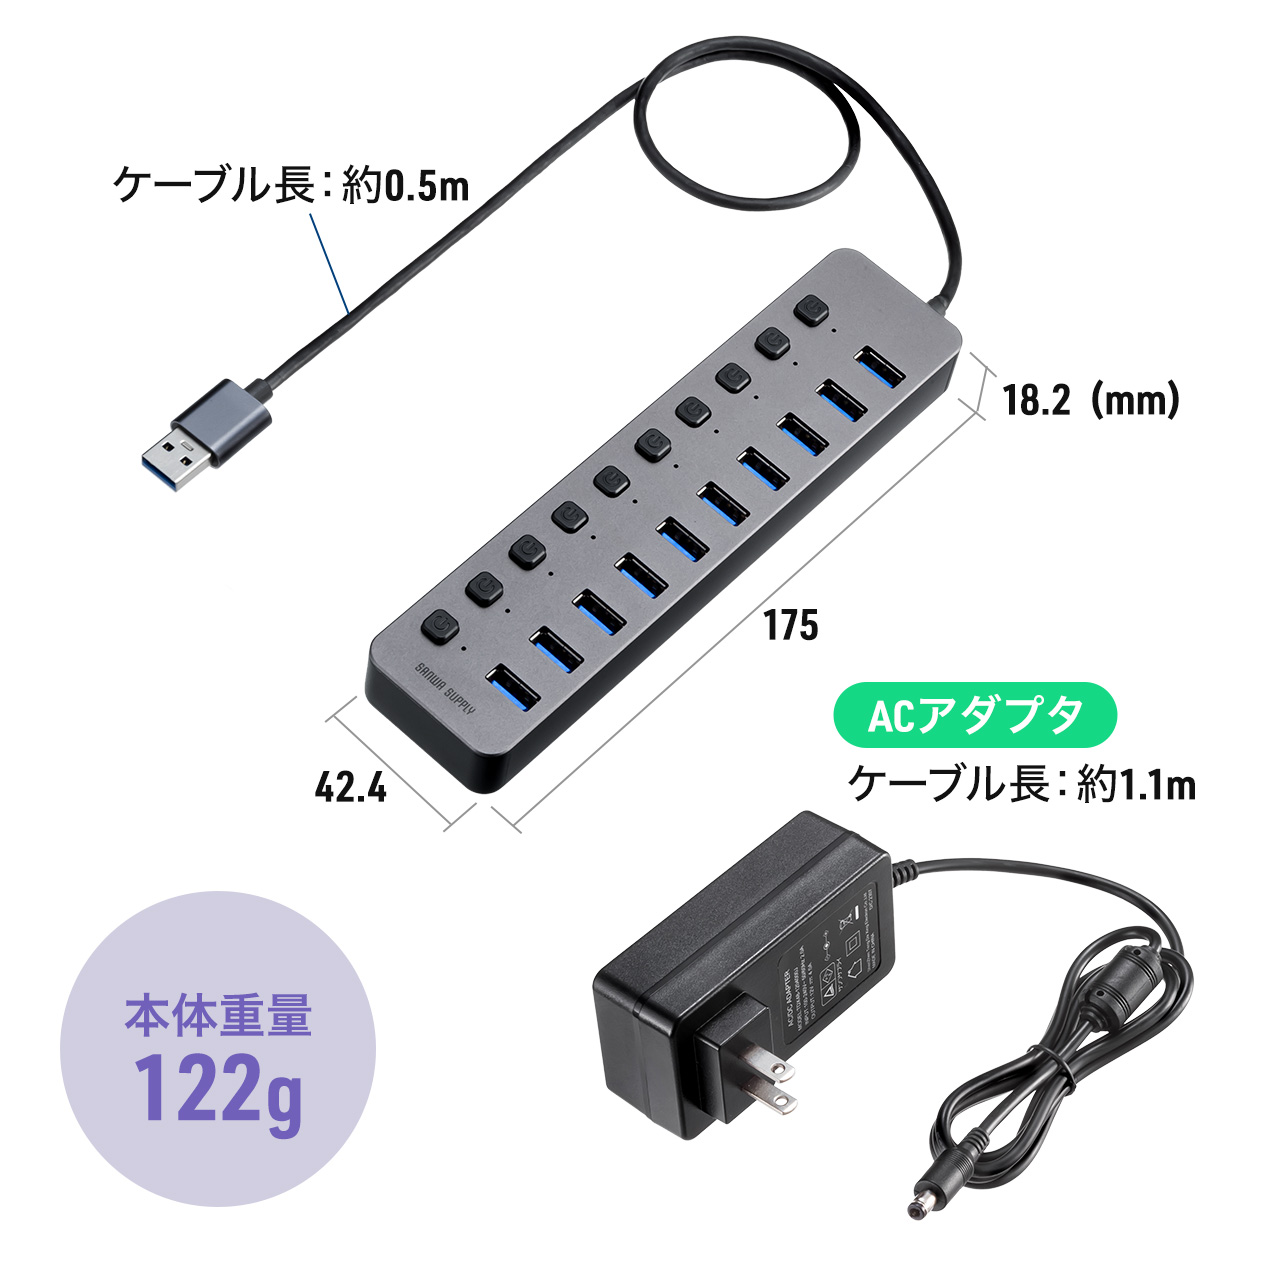 USBnu 10|[g ACA_v^t USB[d ʃXCb`t USB3.2/5Gbps 400-HUBA23GM